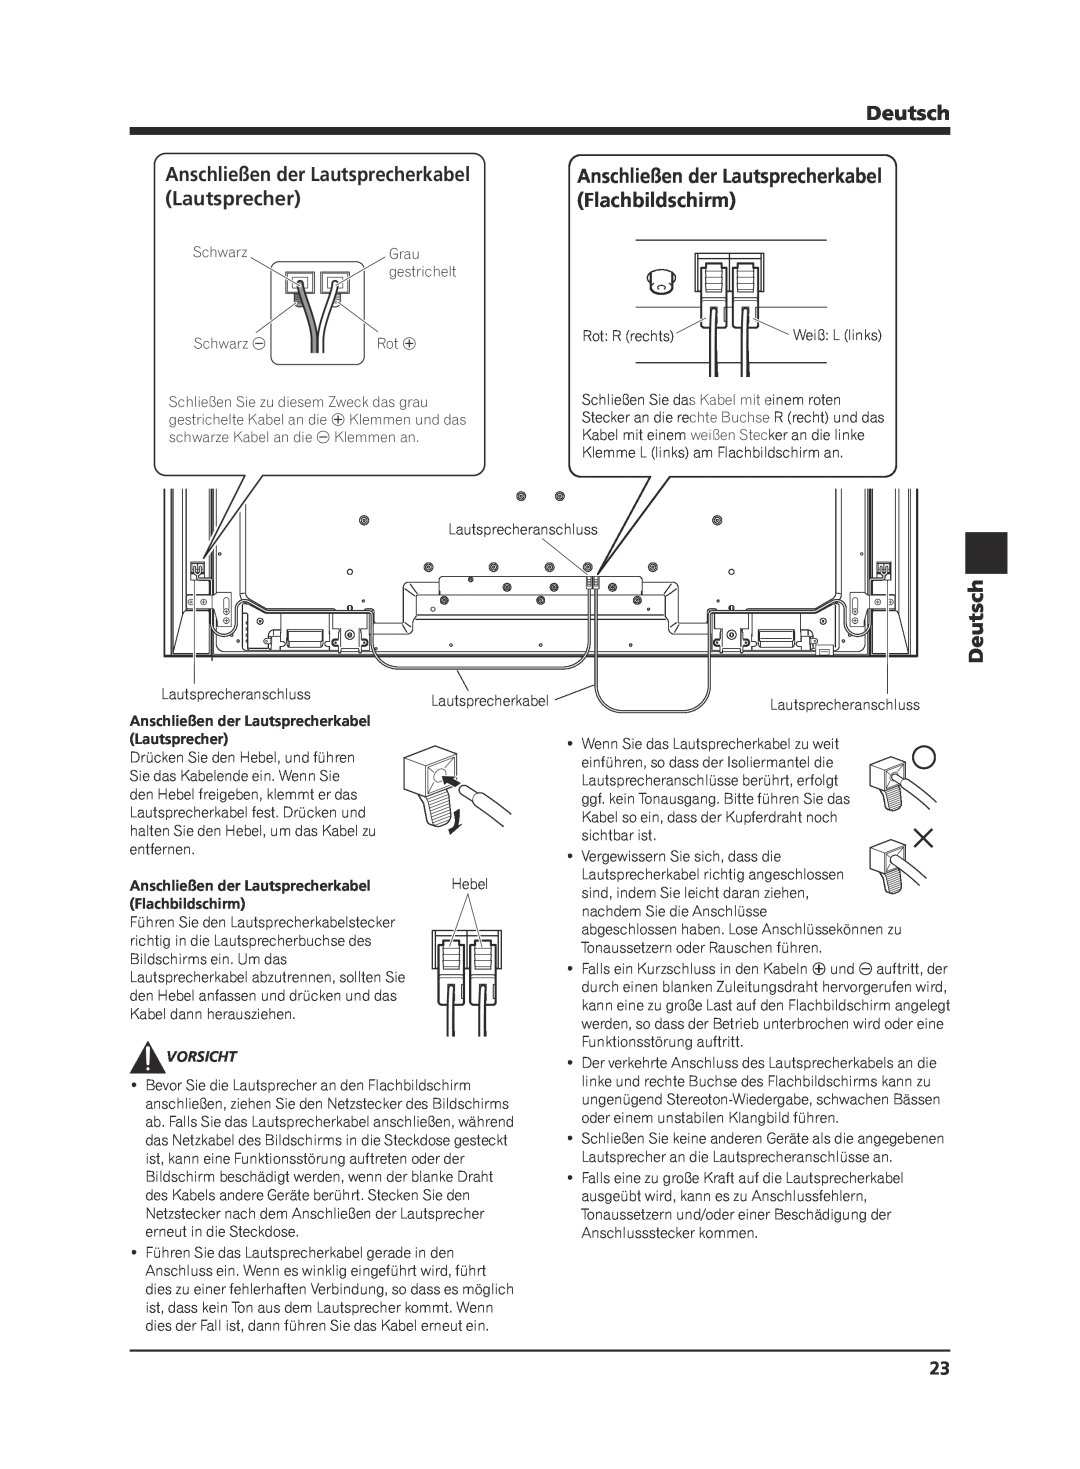 Pioneer KRP-S02 manual Anschließen der Lautsprecherkabel, Flachbildschirm, Deutsch, Hebel, Vorsicht 